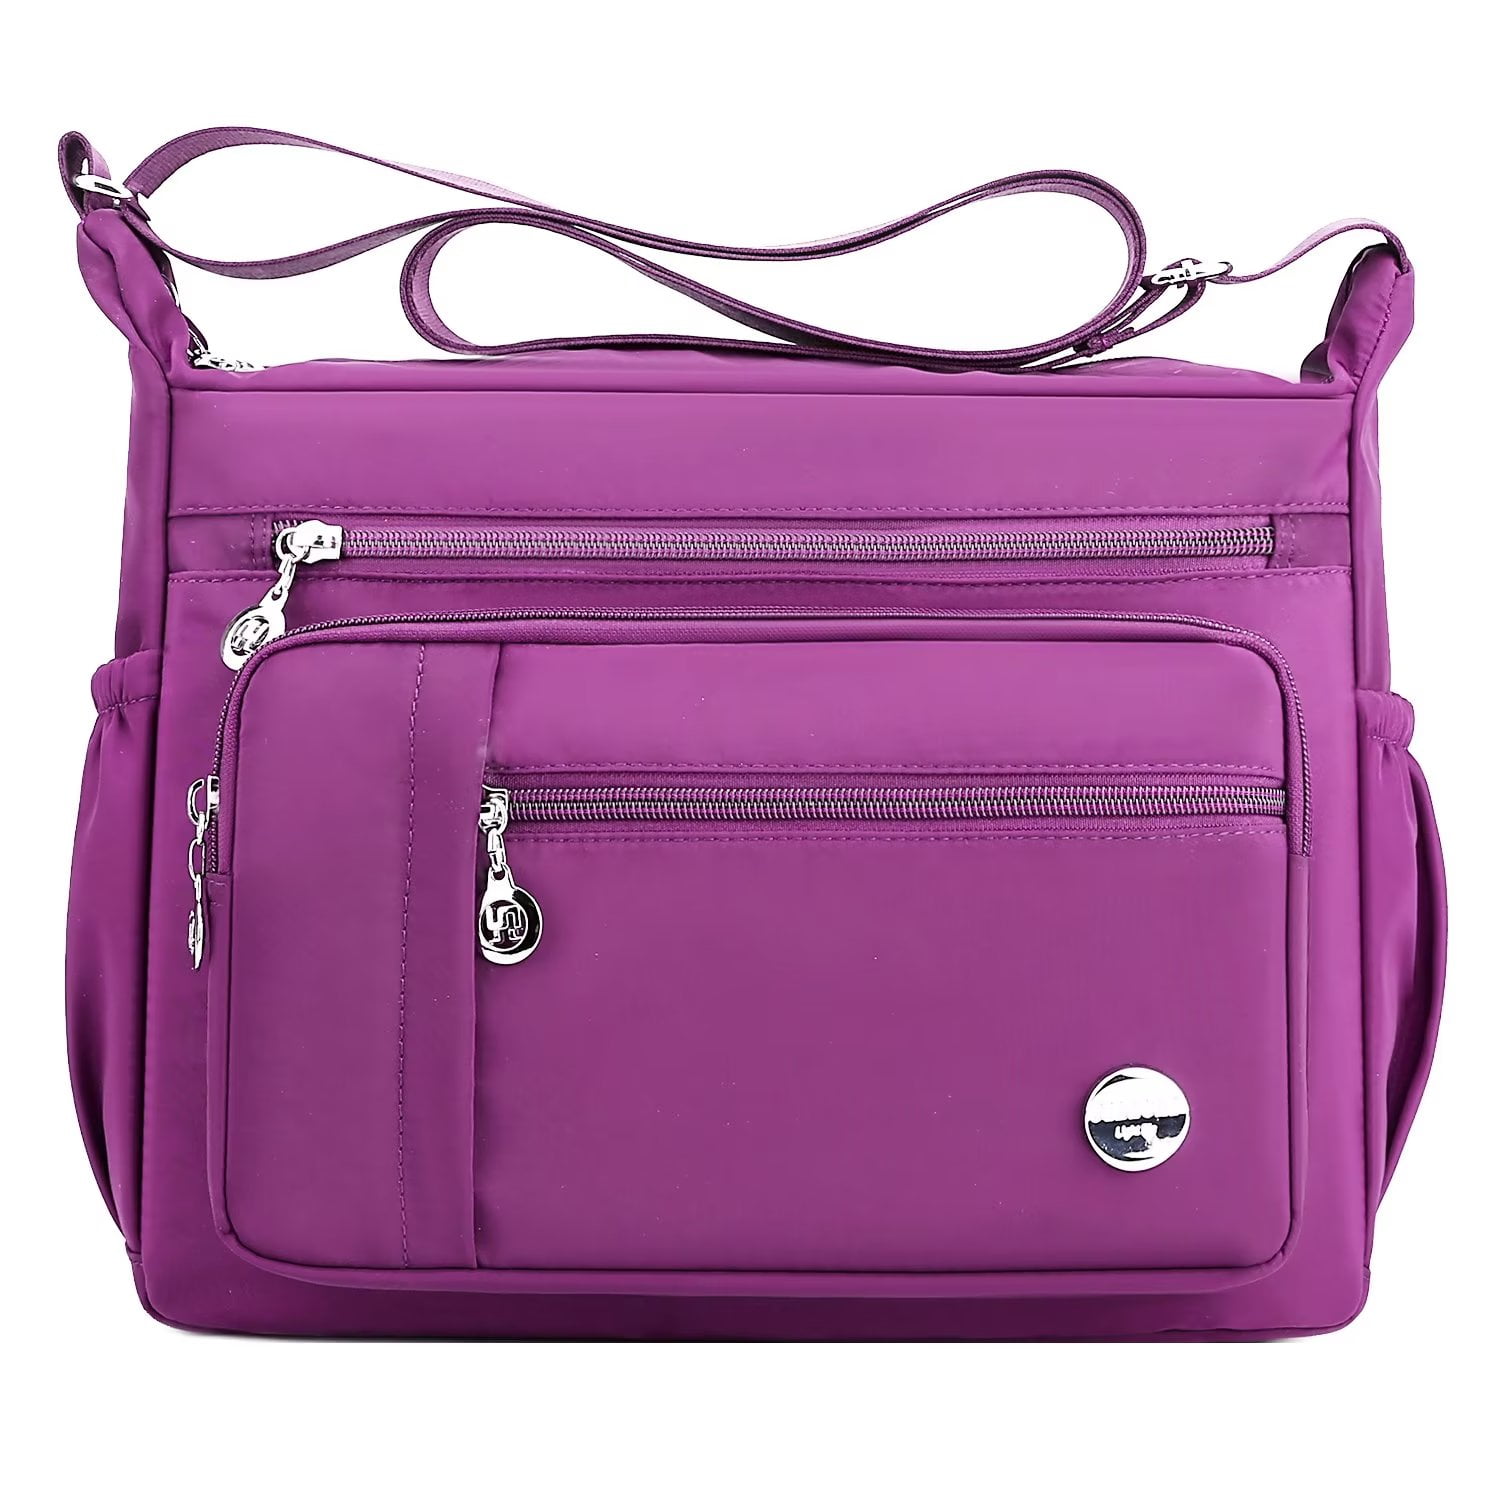 MINTEGRA Women Shoulder Handbag Roomy Multiple Pockets Bag Ladies ...